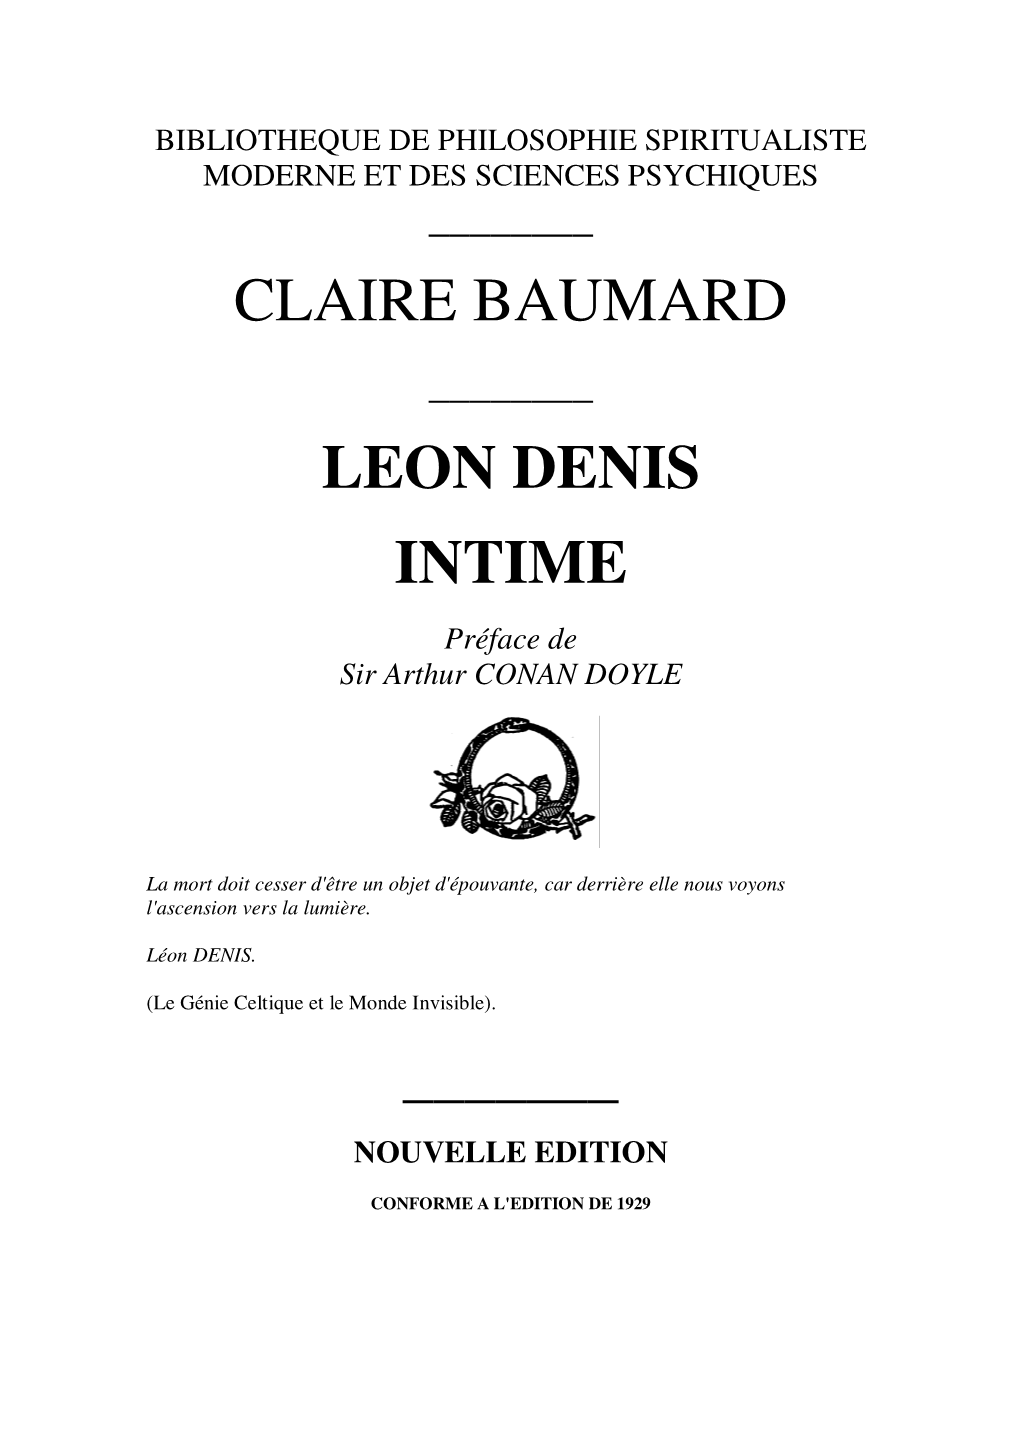 Claire Baumard Leon Denis Intime ___